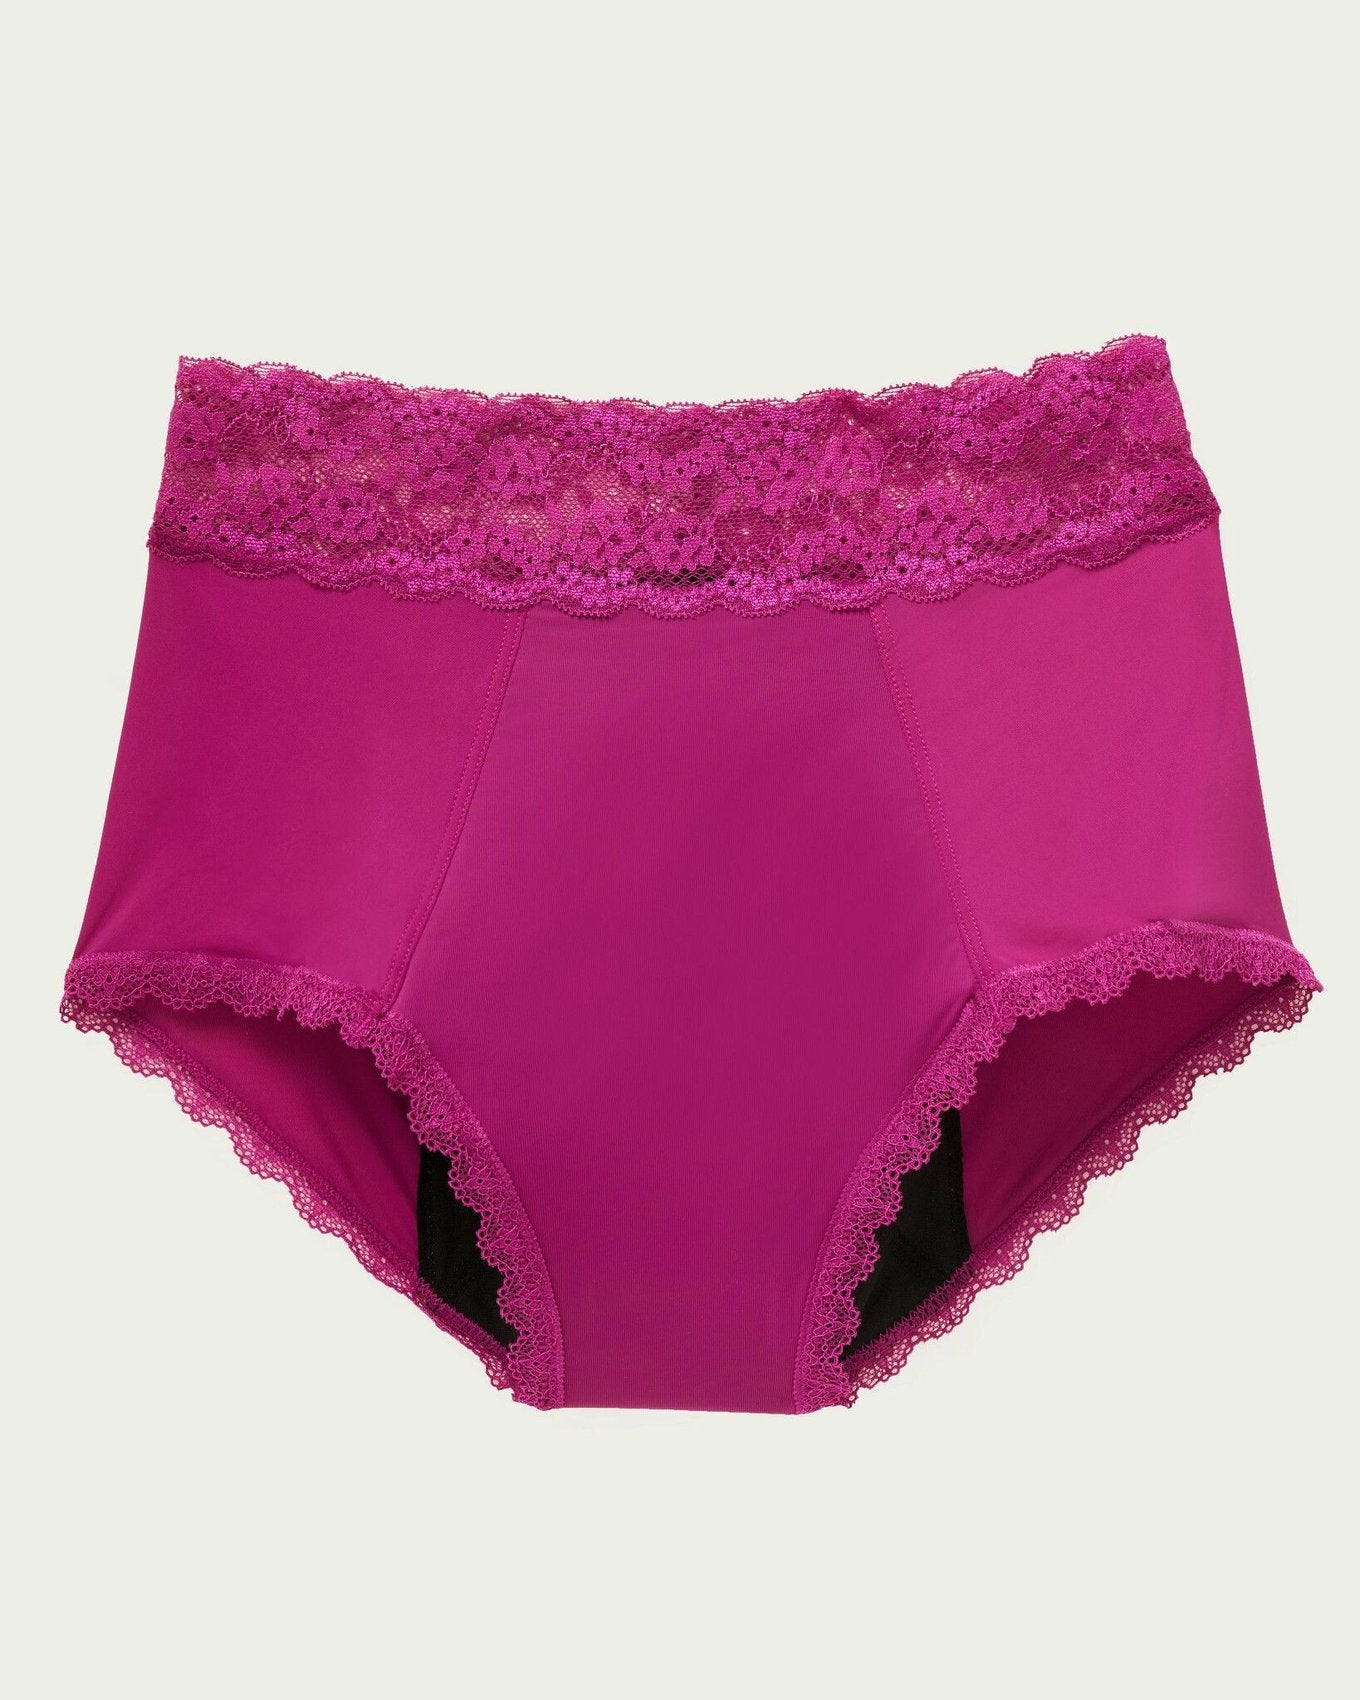 Joyja Amelia period-proof panty in color Festival Fuchsia and shape high waisted